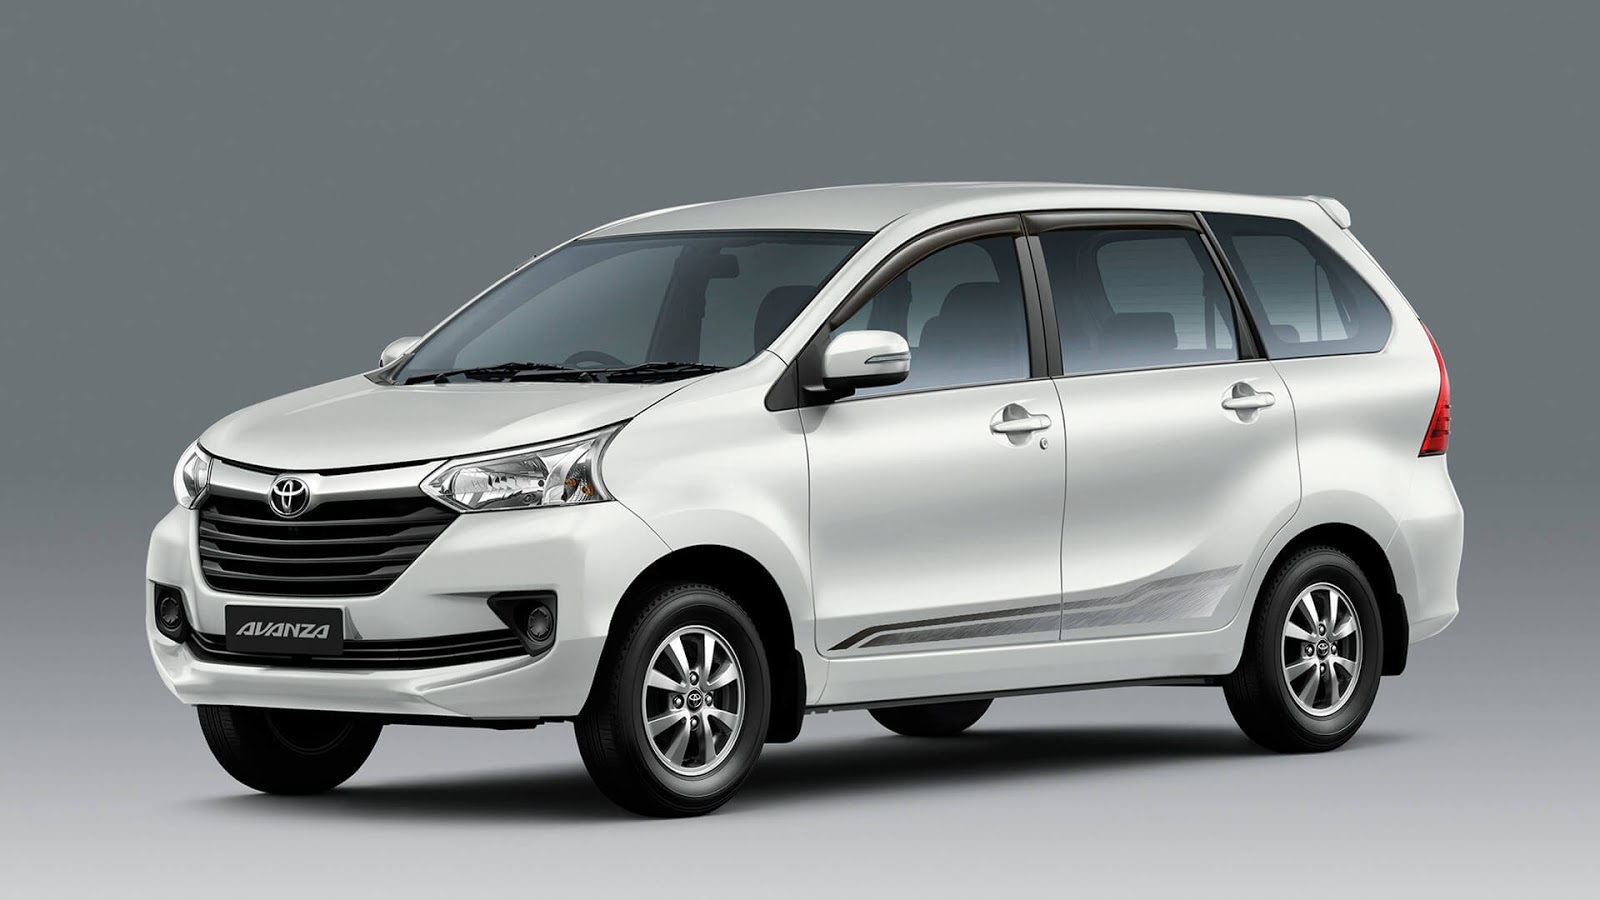 List of Toyota Avanza Types Price List Philippines Top 